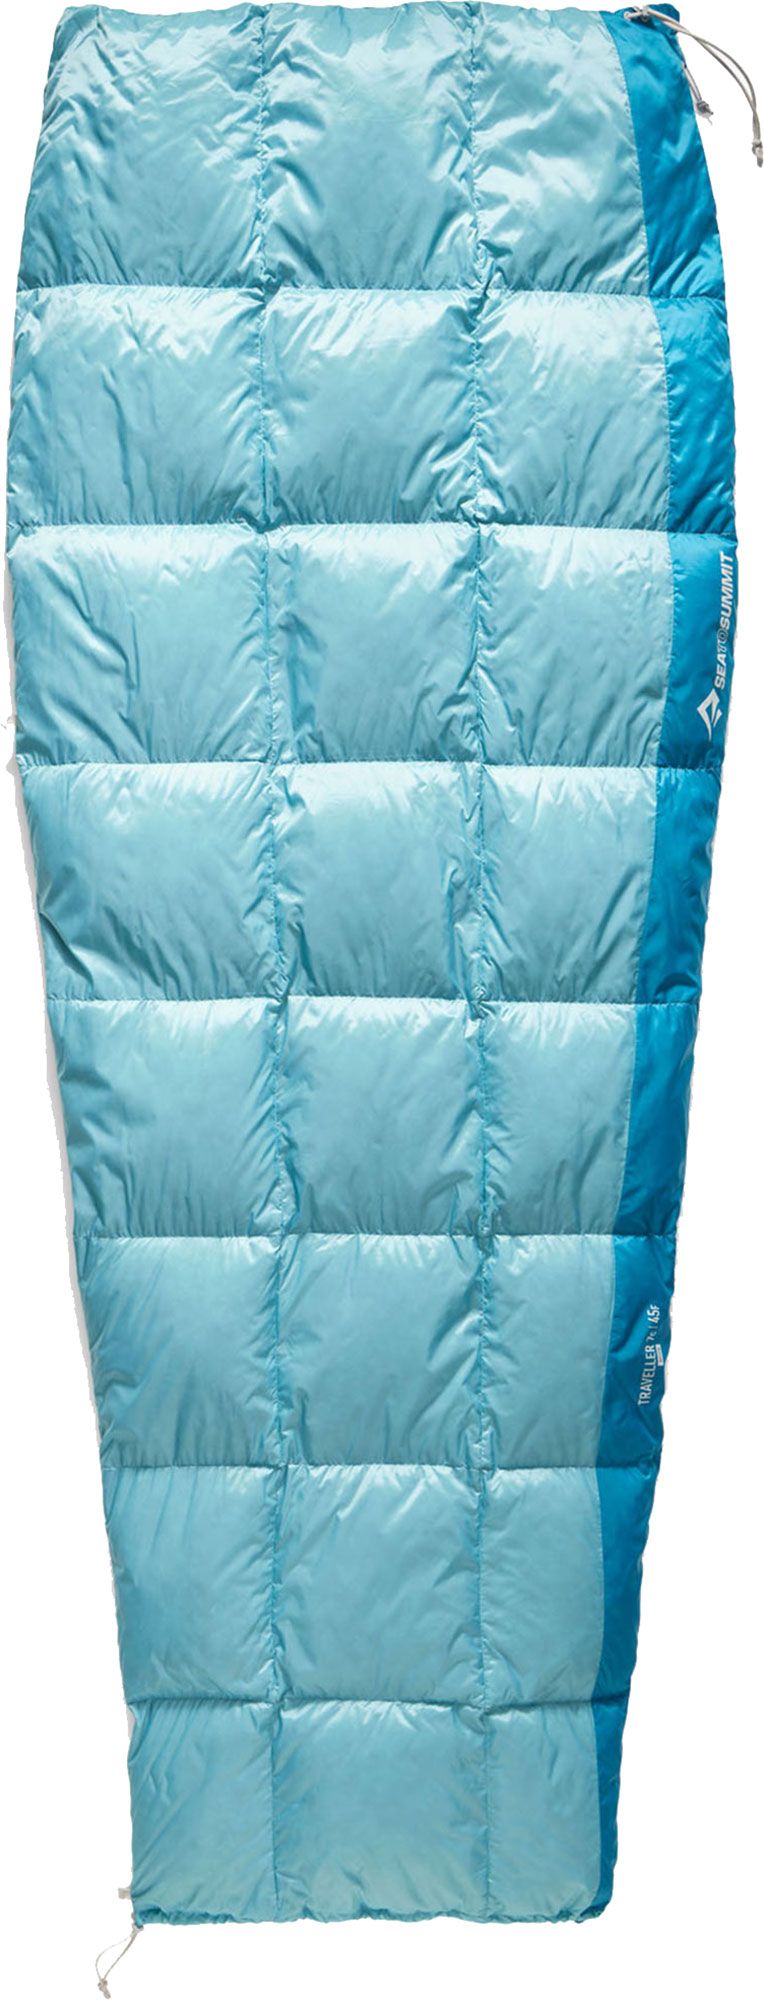 Photos - Suitcase / Backpack Cover Sea To Summit Traveller Sleeping Bag & Blanket, Men's, Regular, Aqua Sea 2 